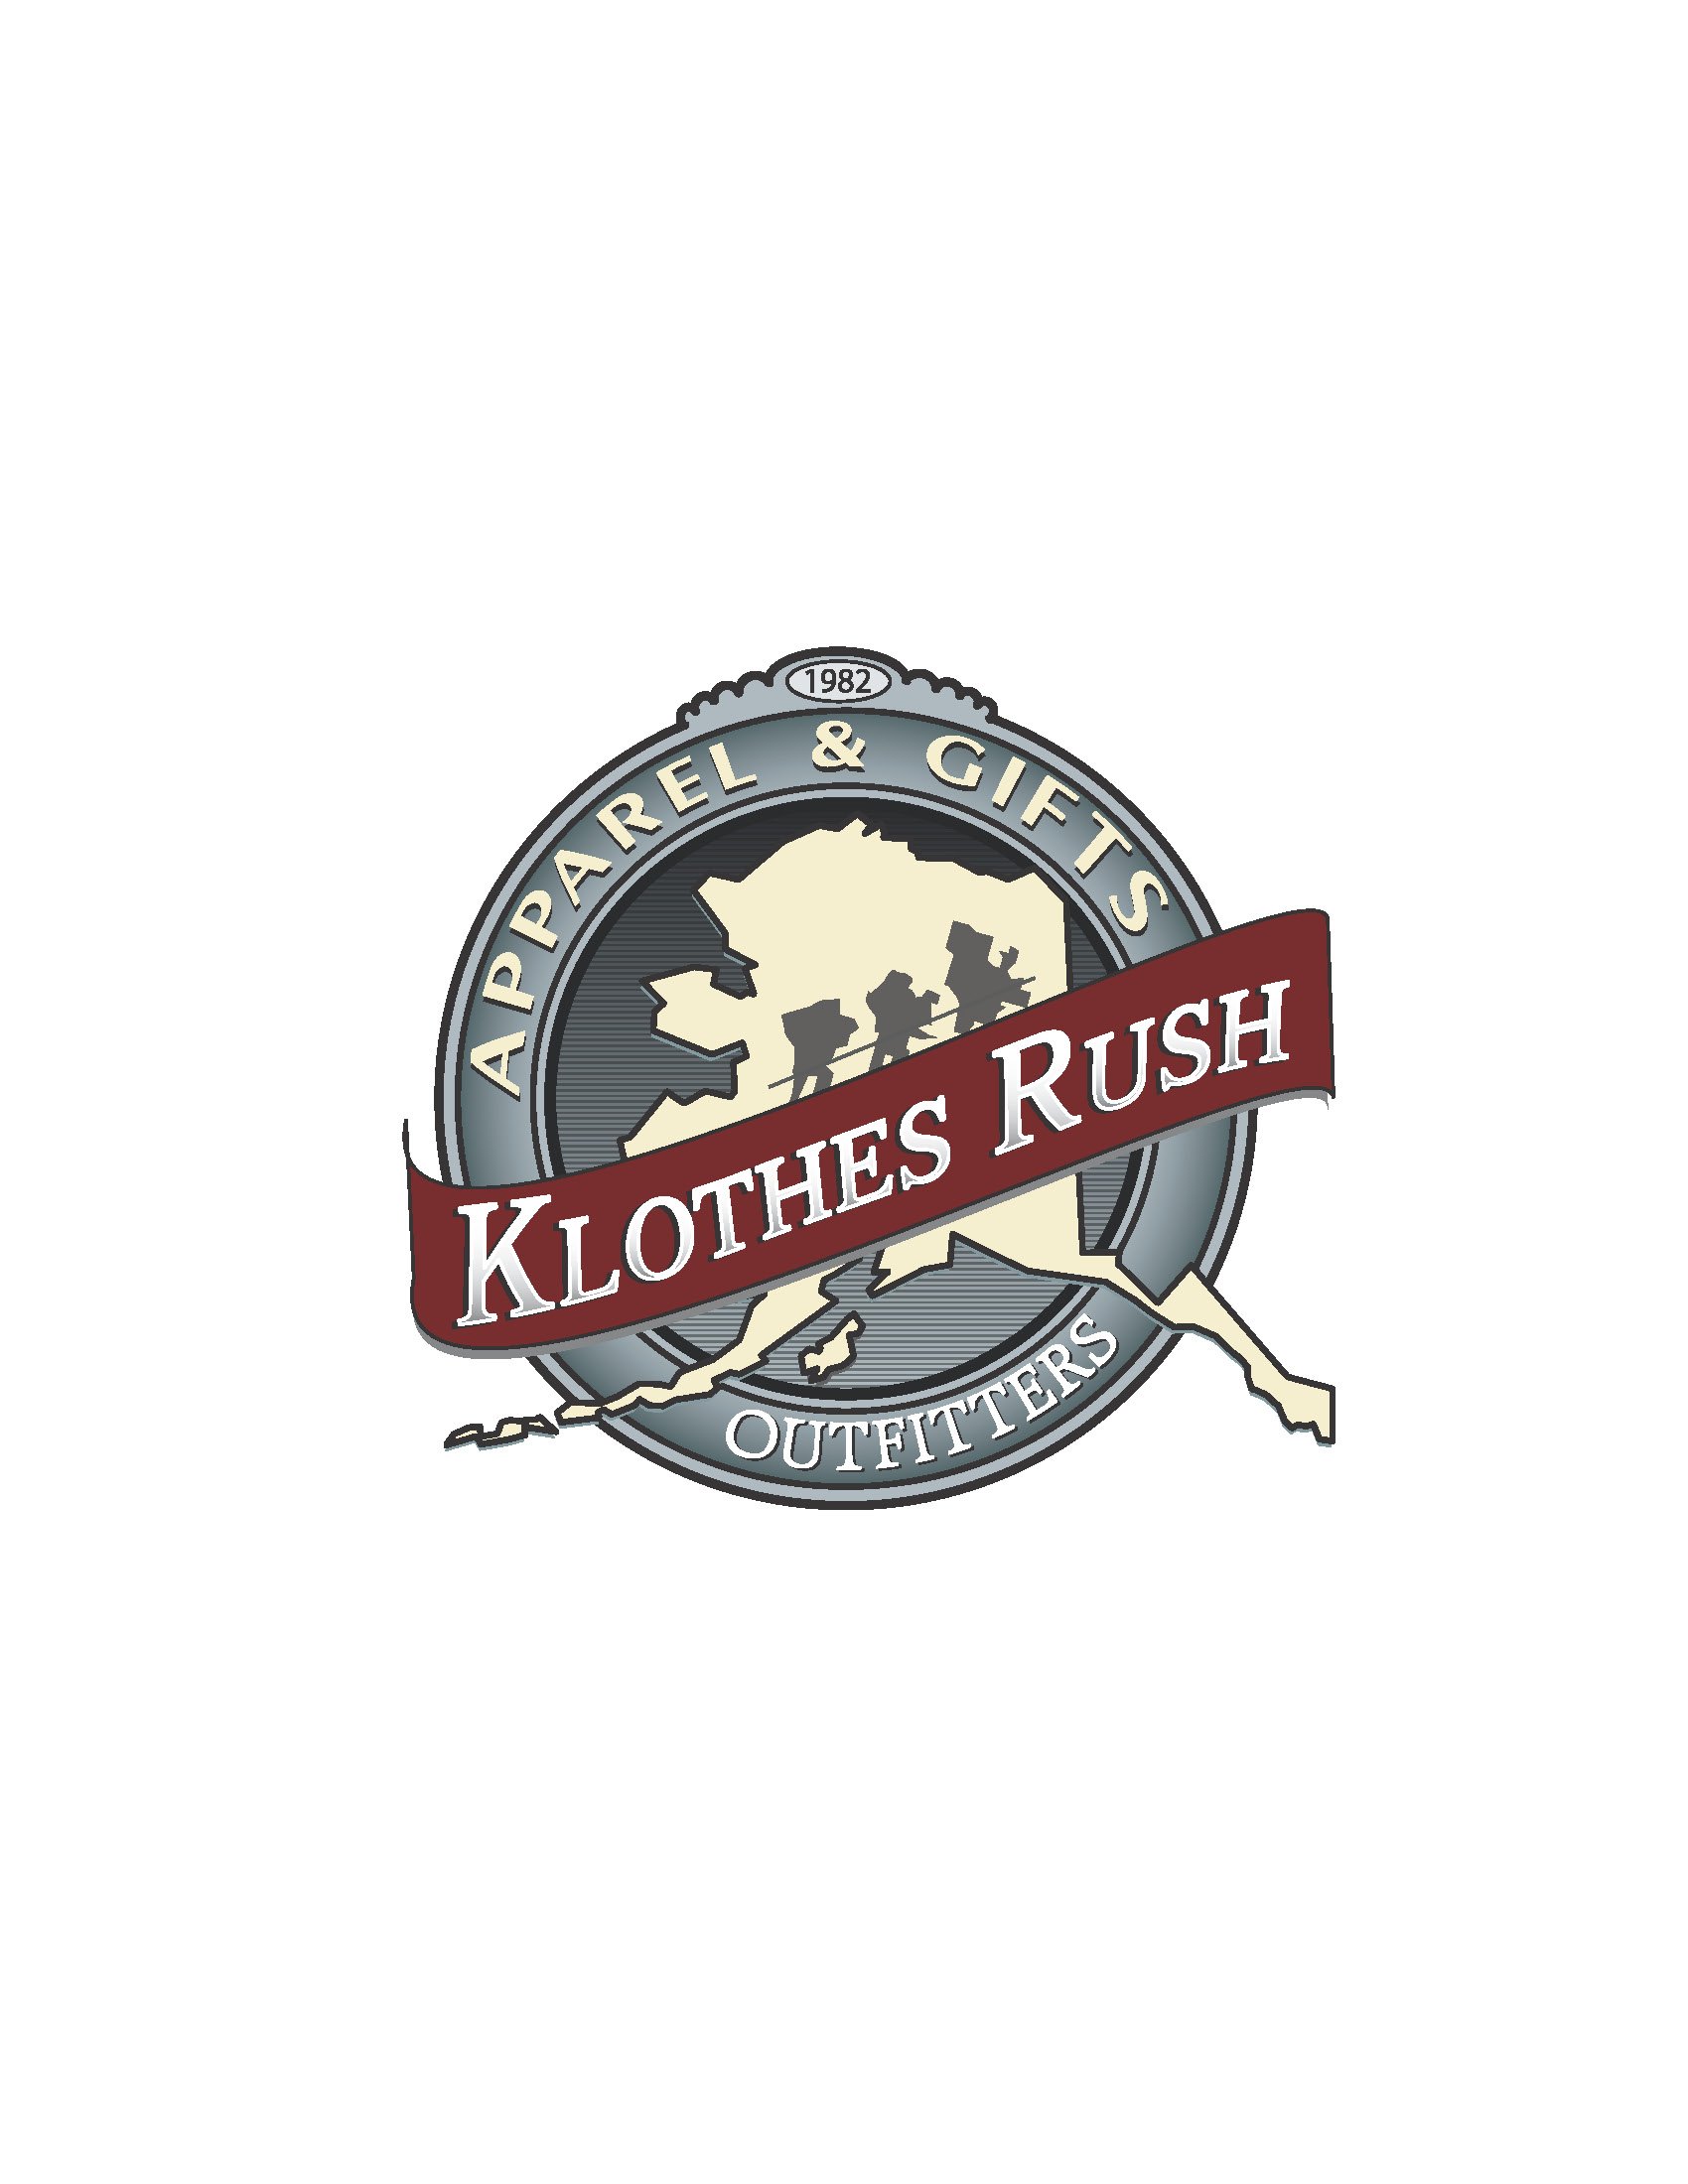 Klothes rush high rez logo.jpg